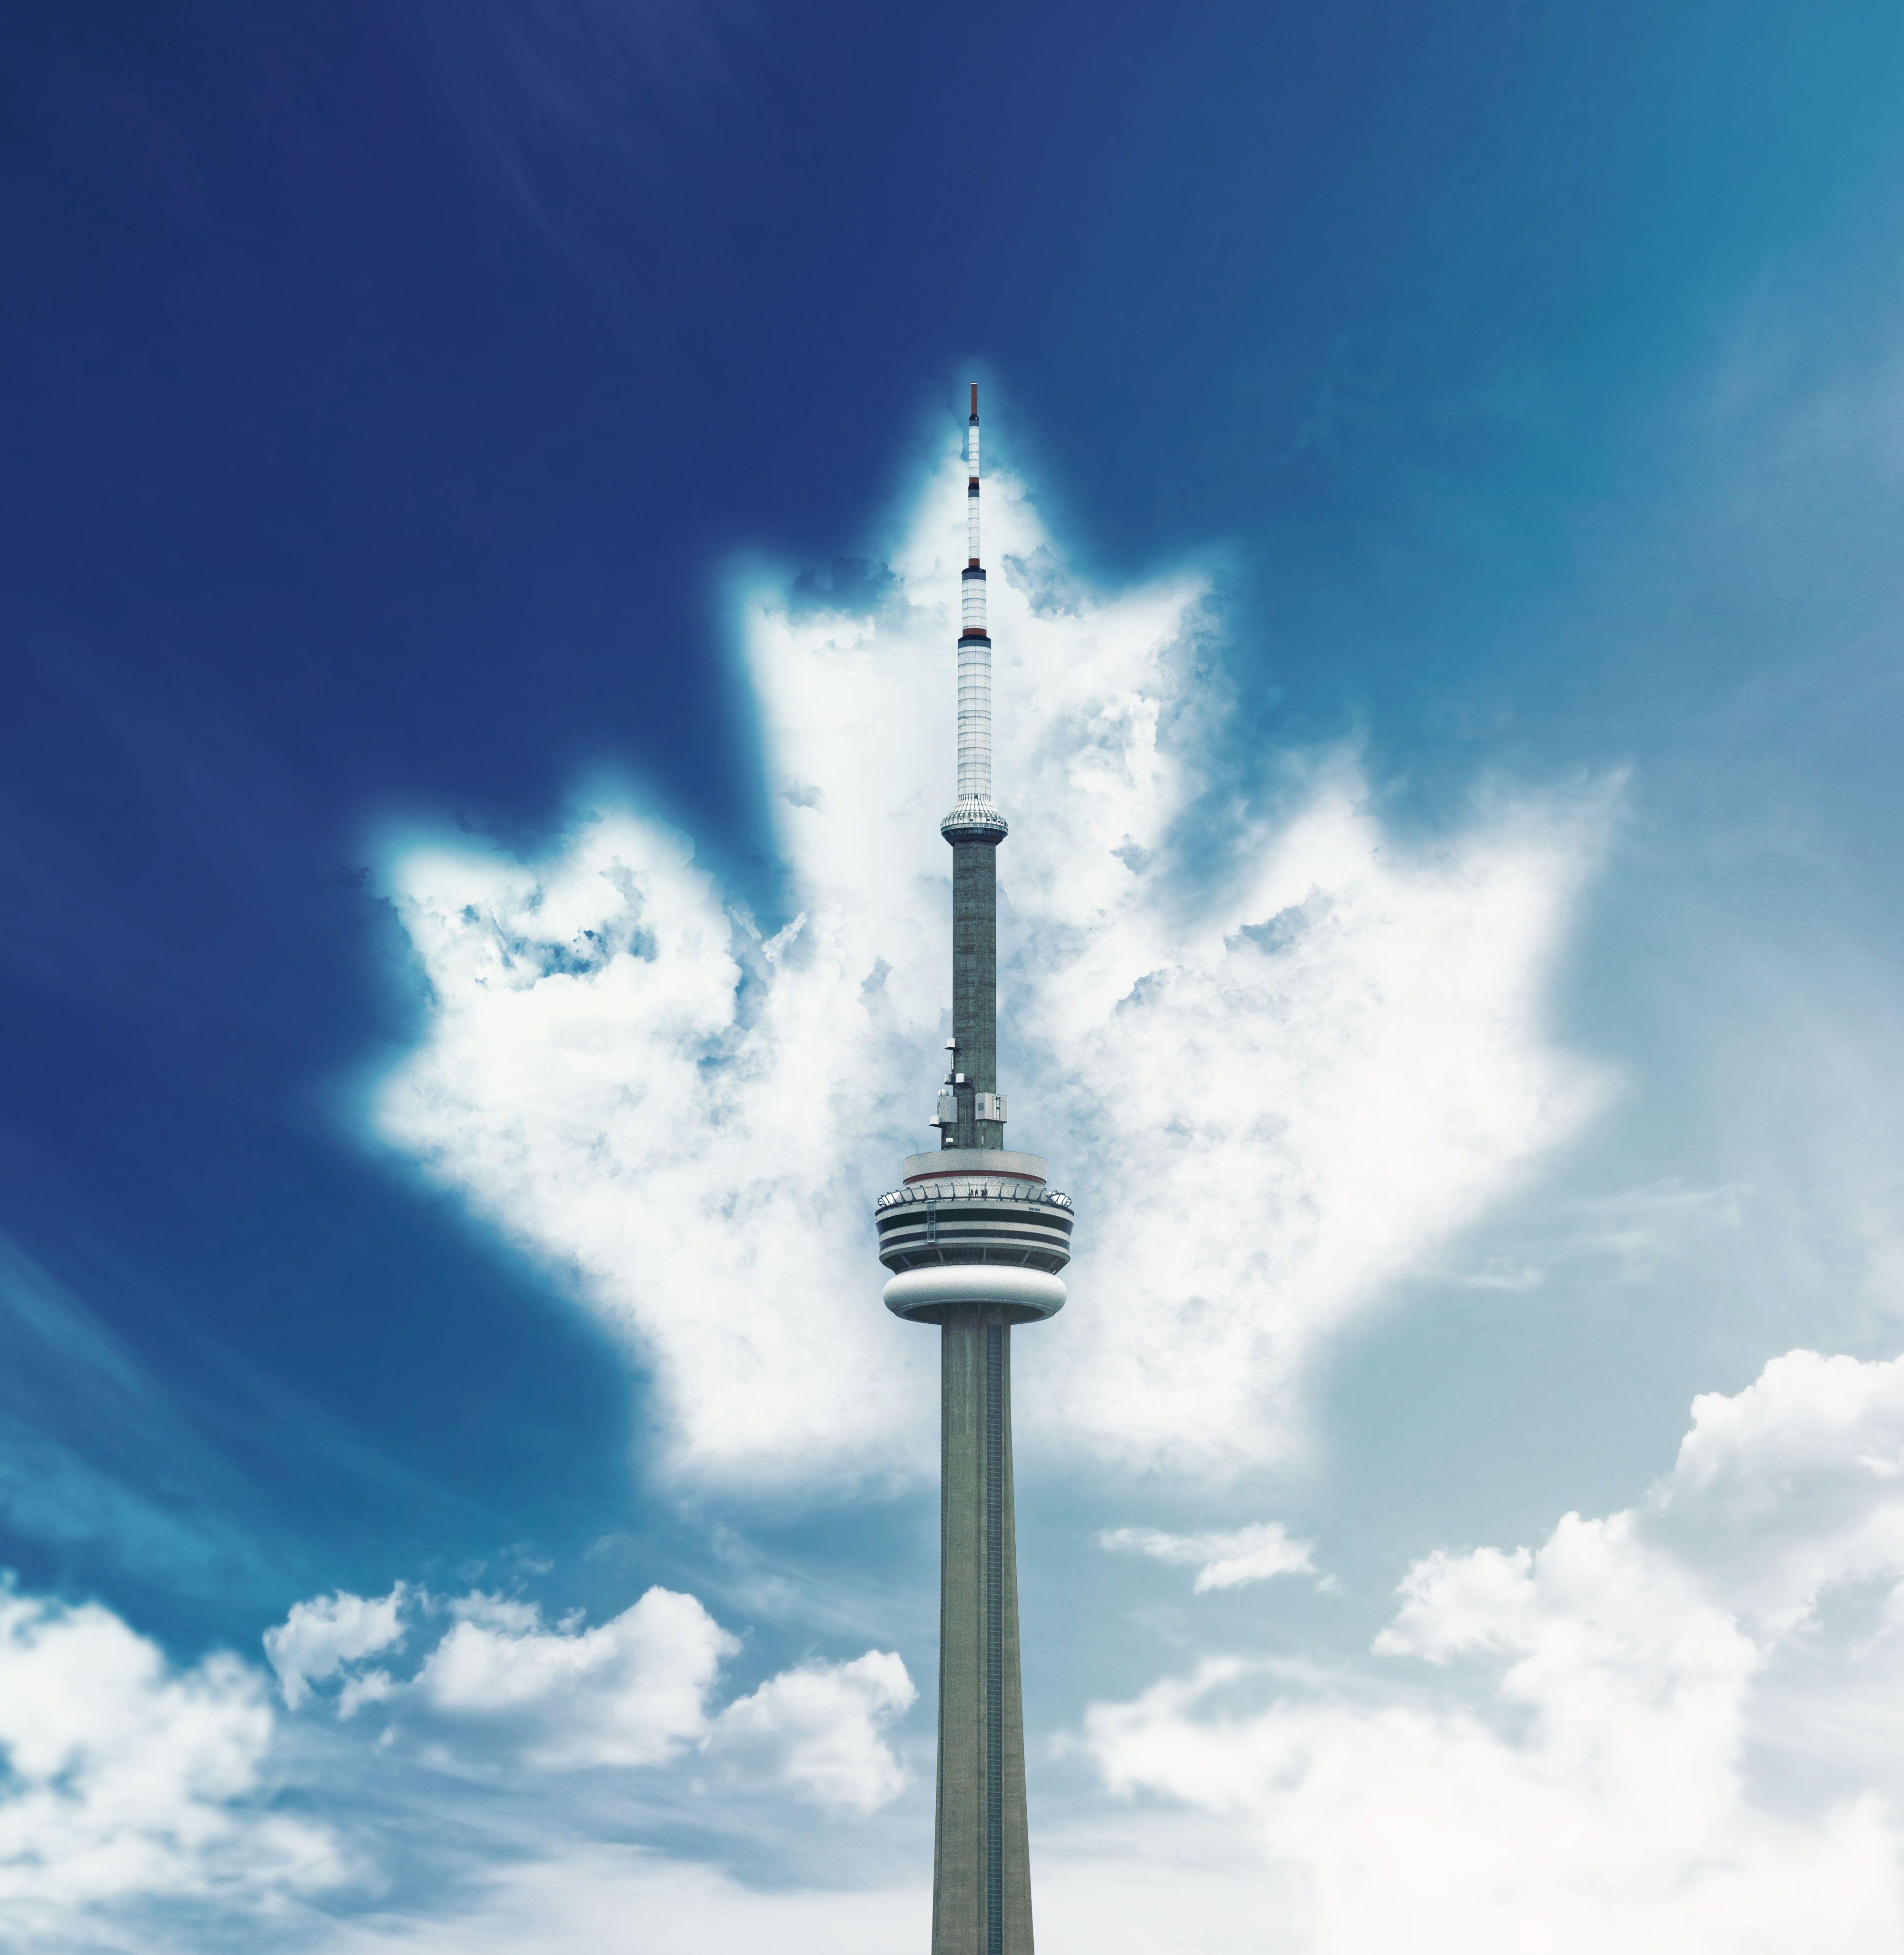 80+ Free Cn Tower & Toronto Images - Pixabay